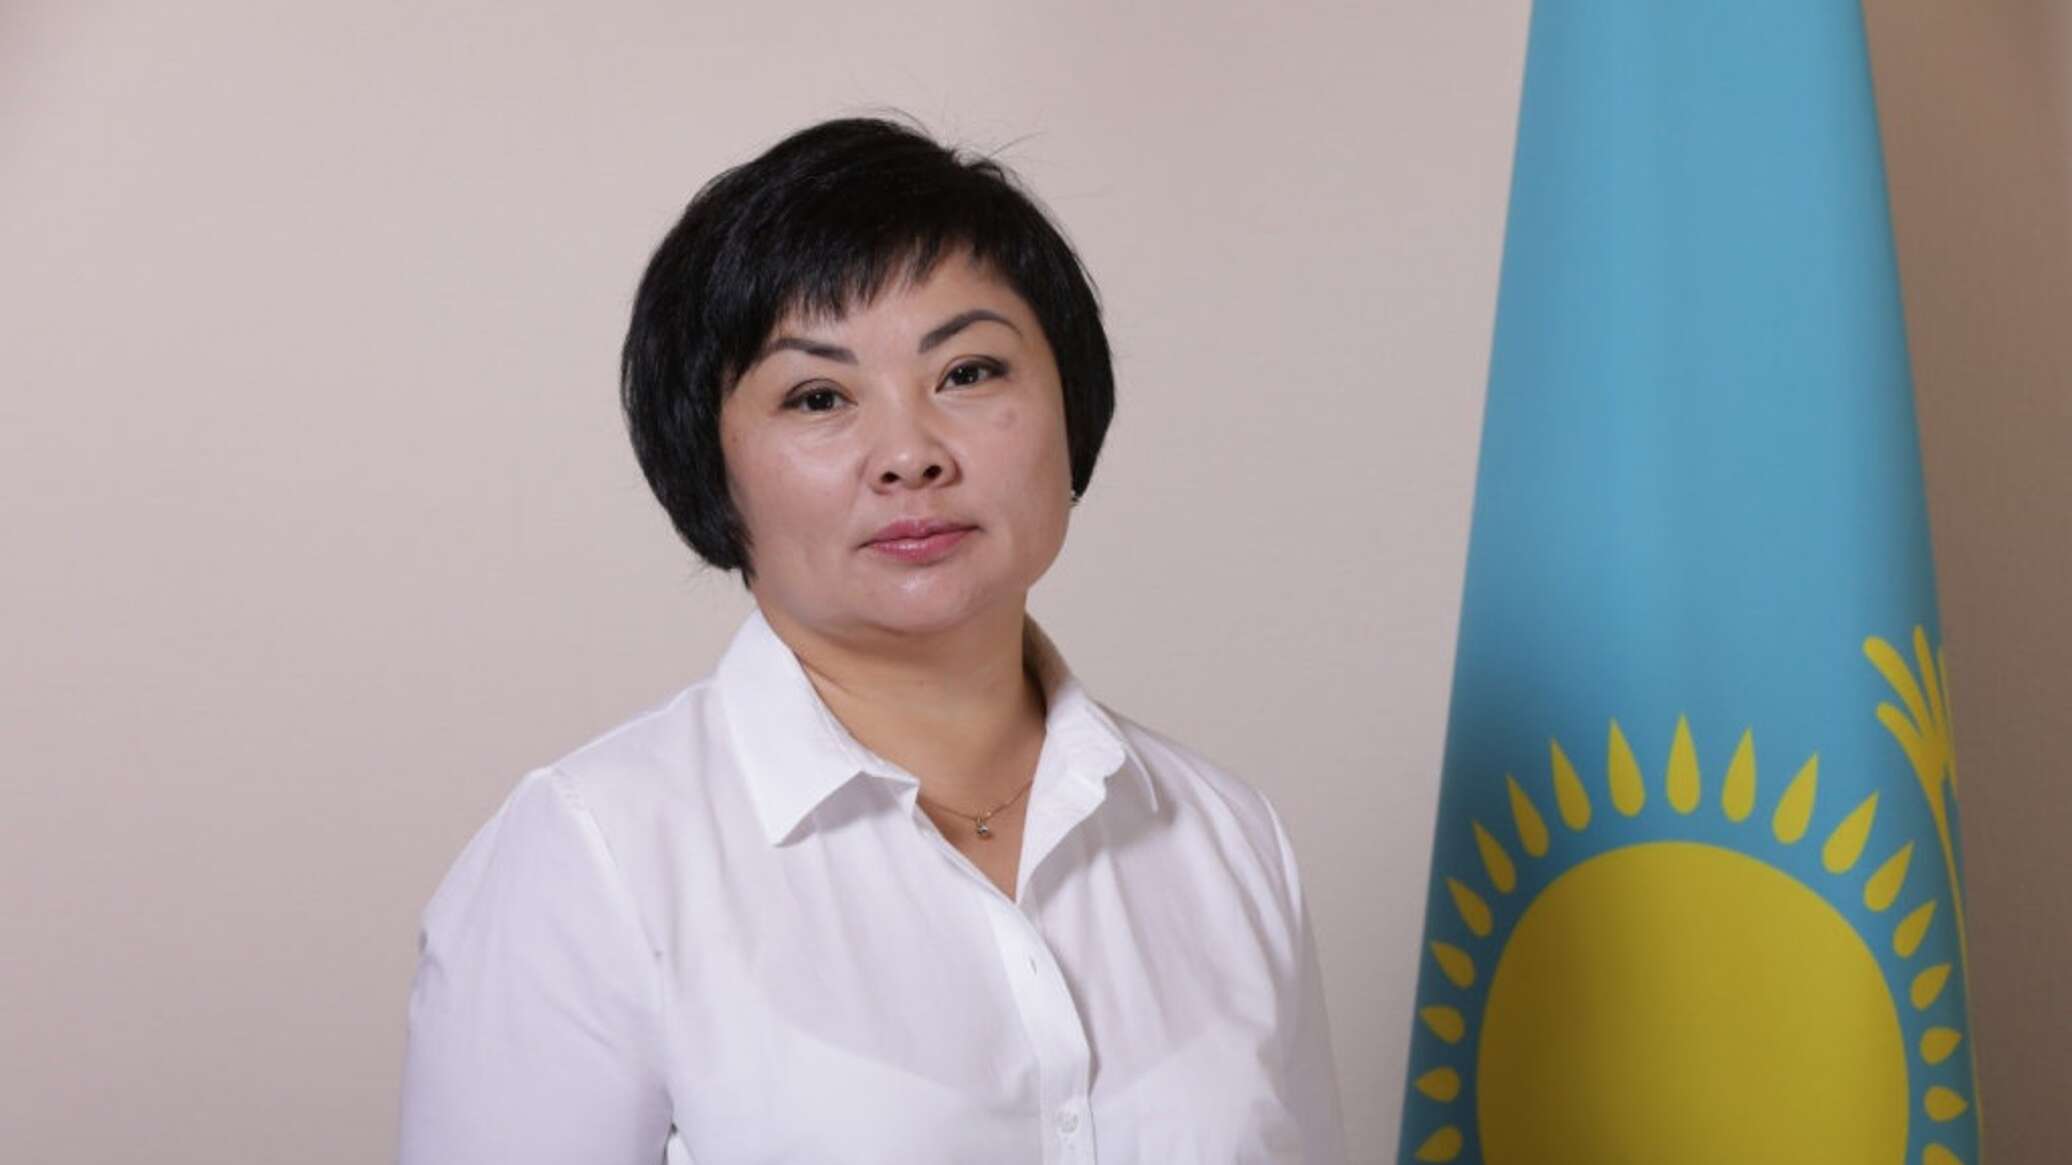 кто министр образования в казахстане